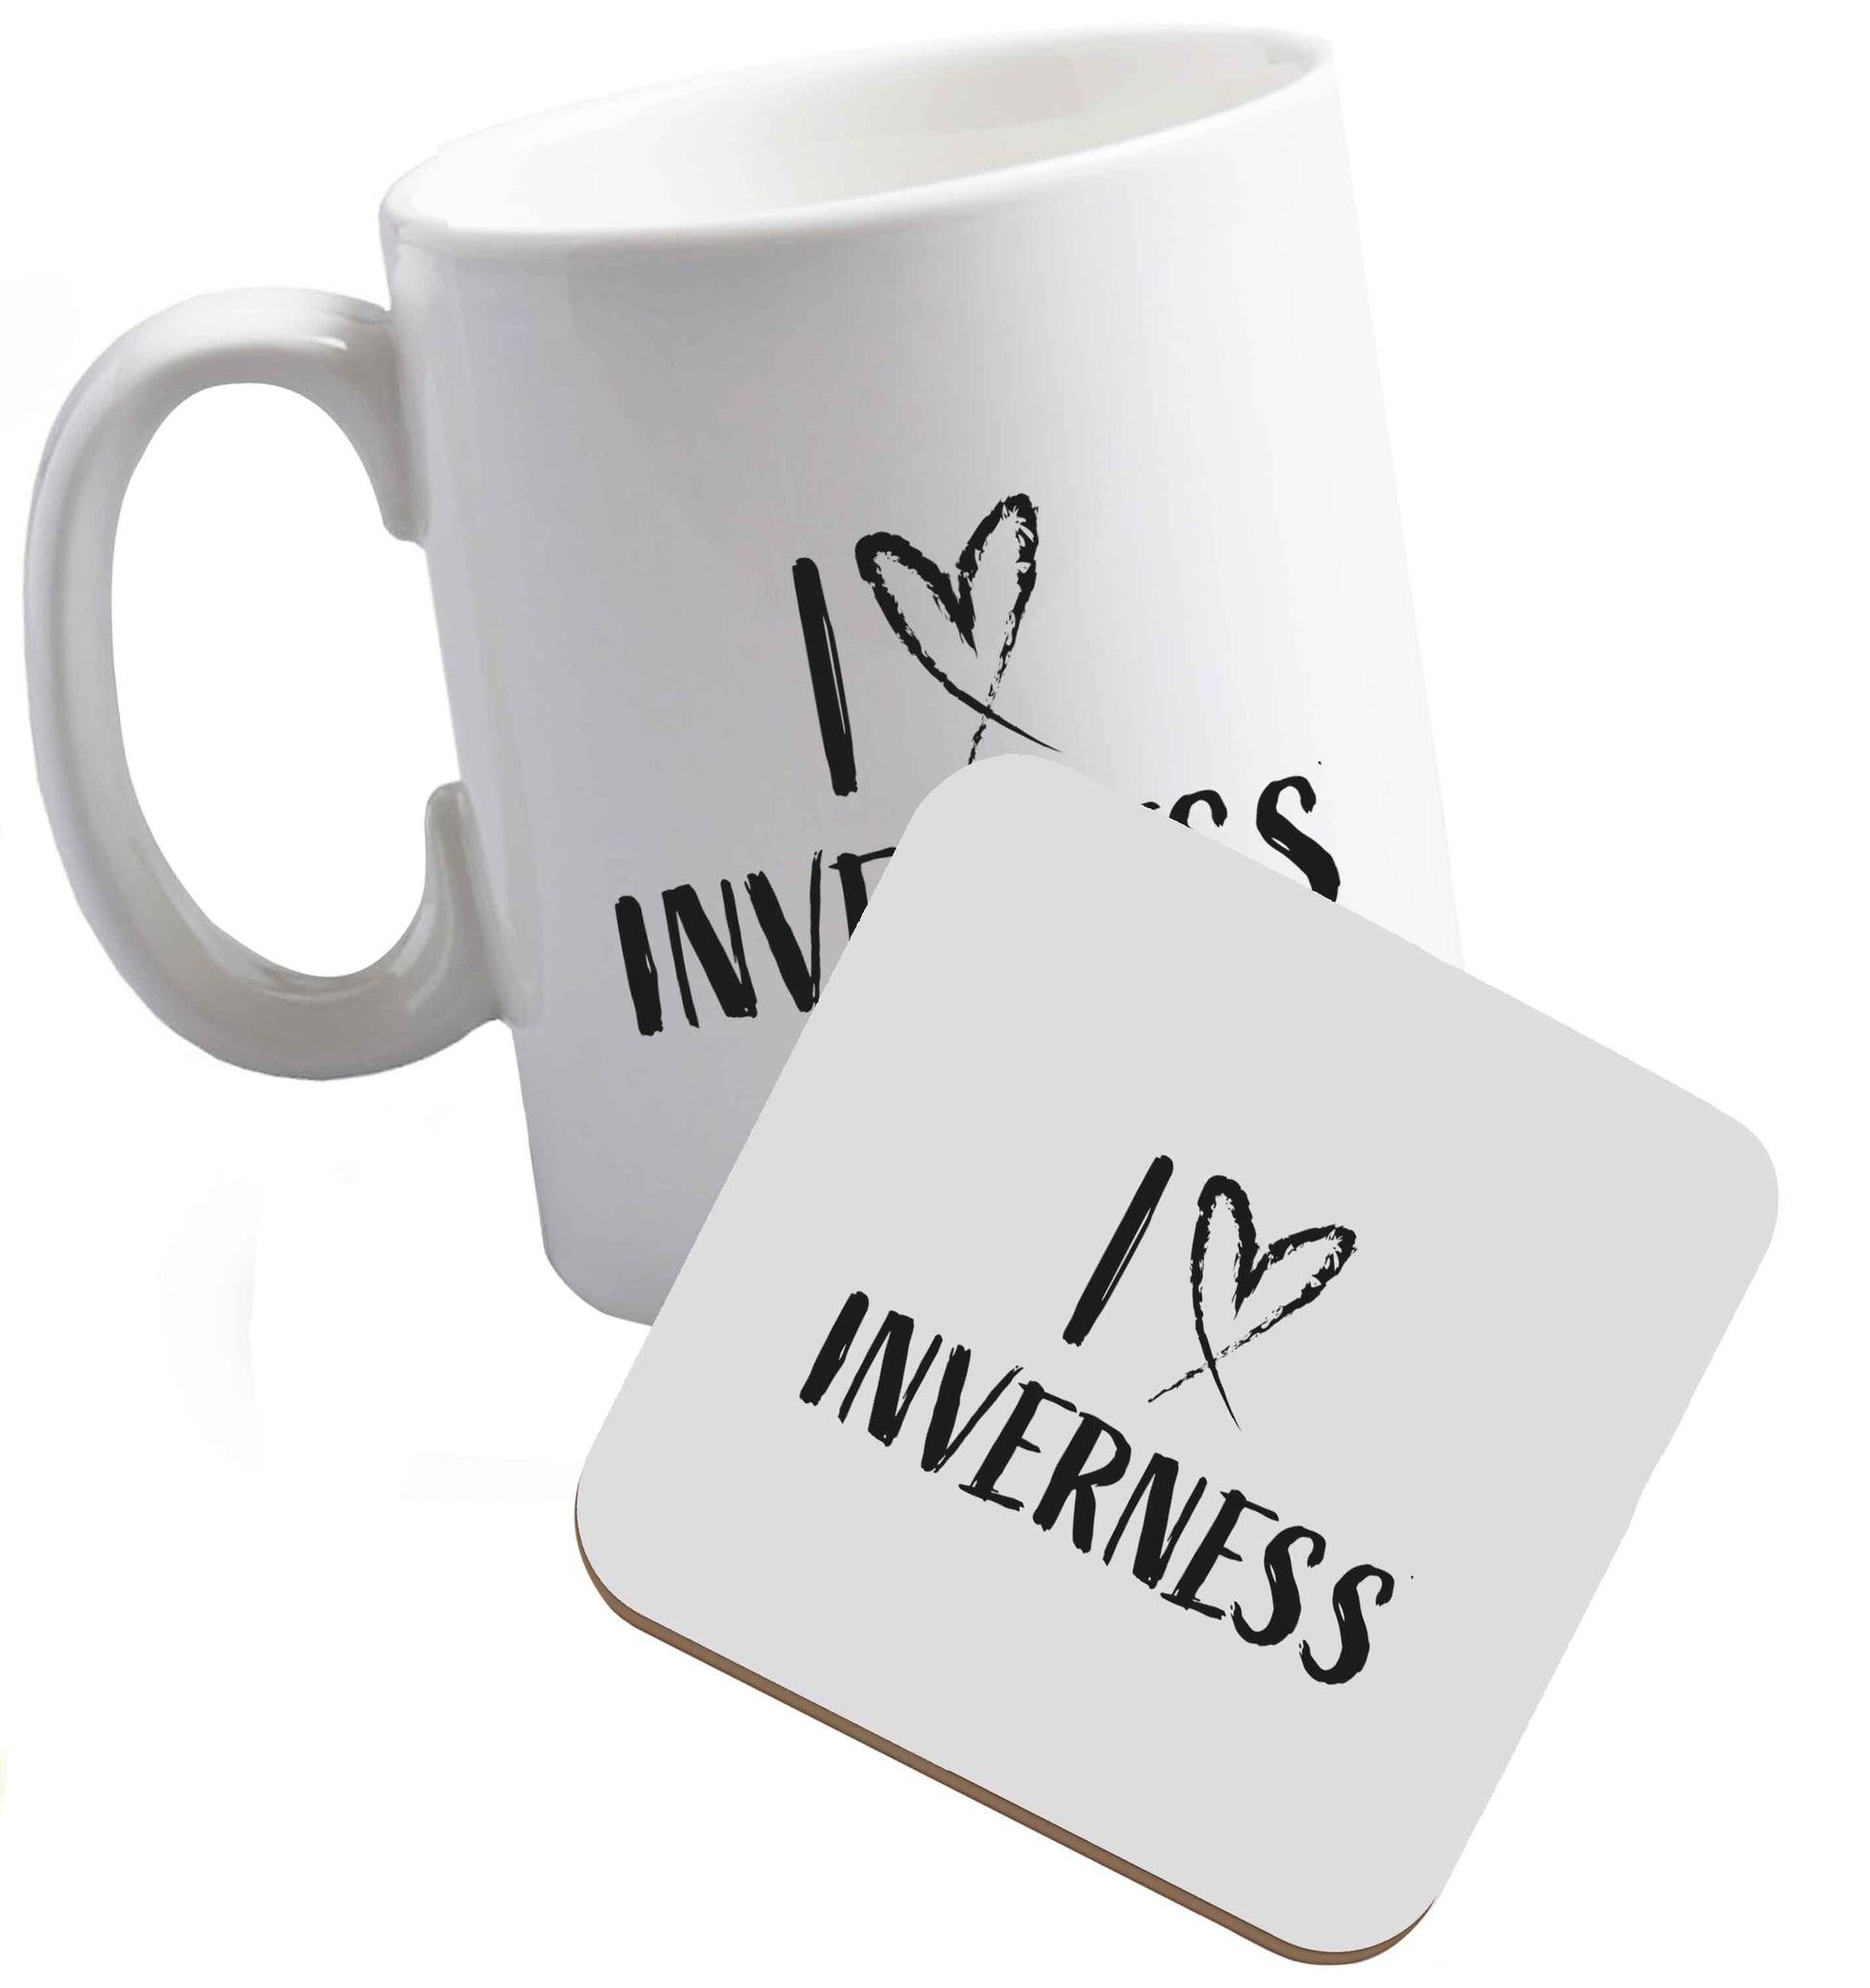 10 oz I love Inverness ceramic mug and coaster set right handed